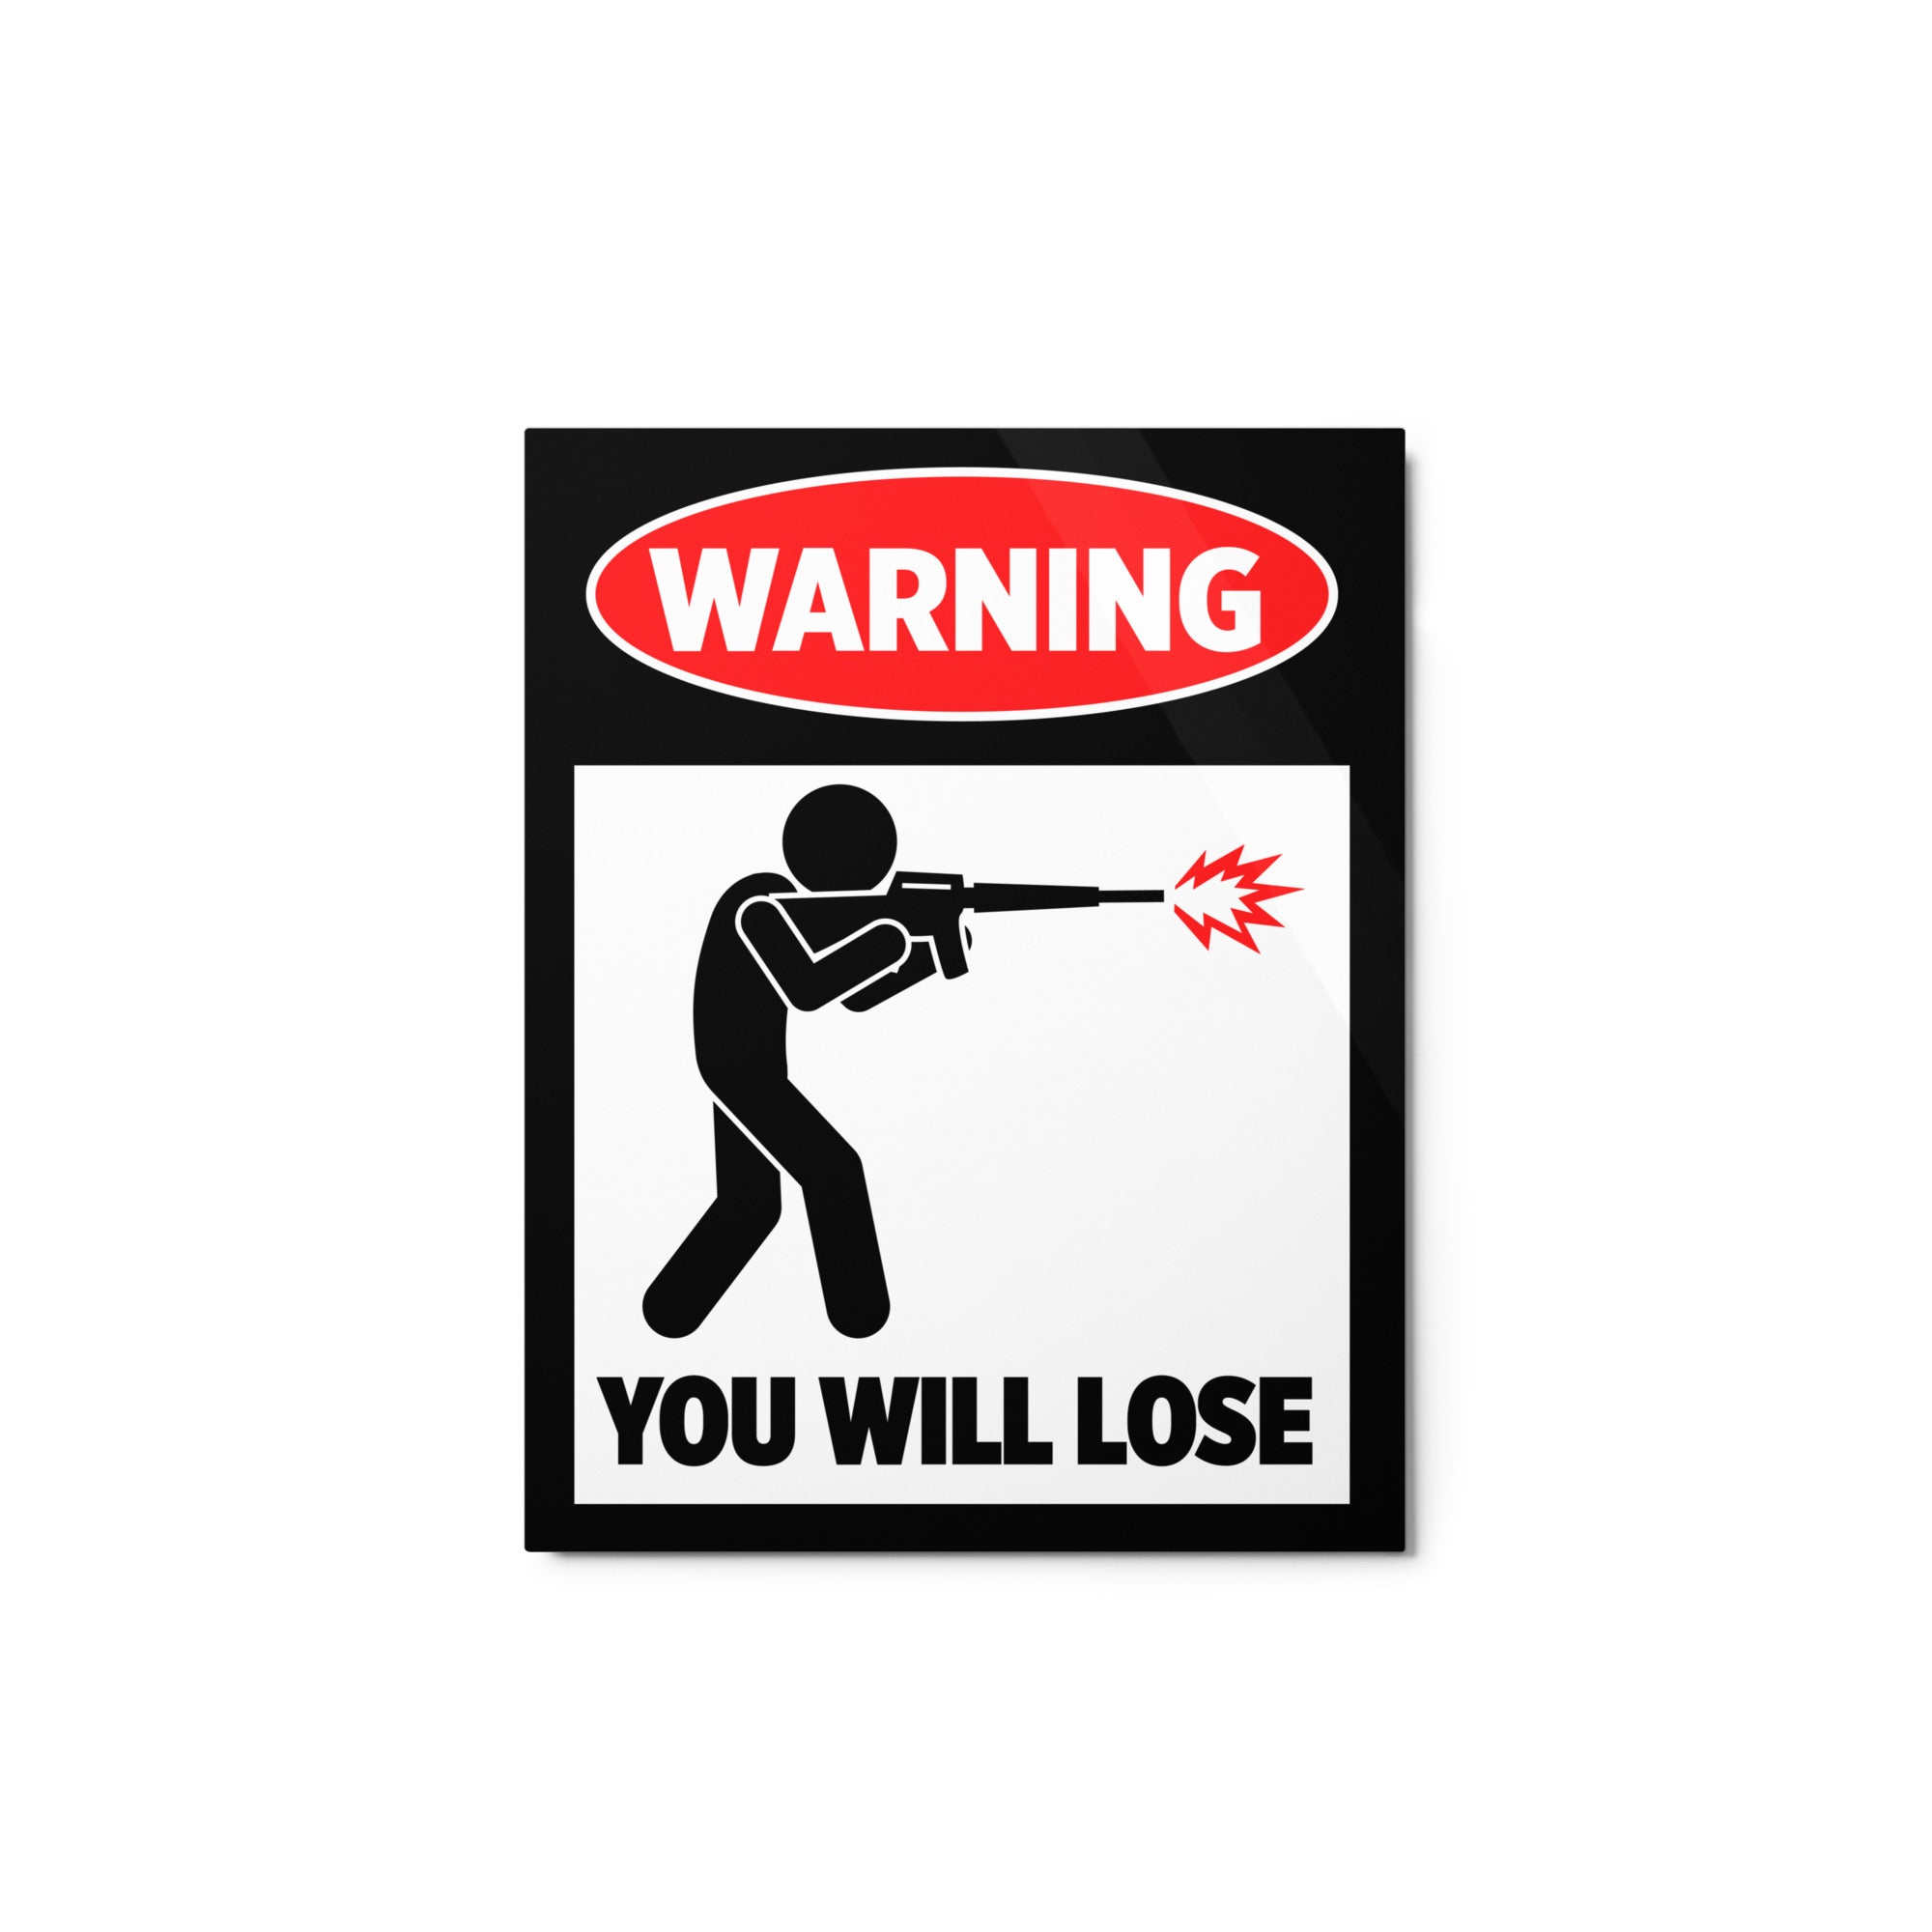 You Will Lose No Trespassing Metal Warning Sign